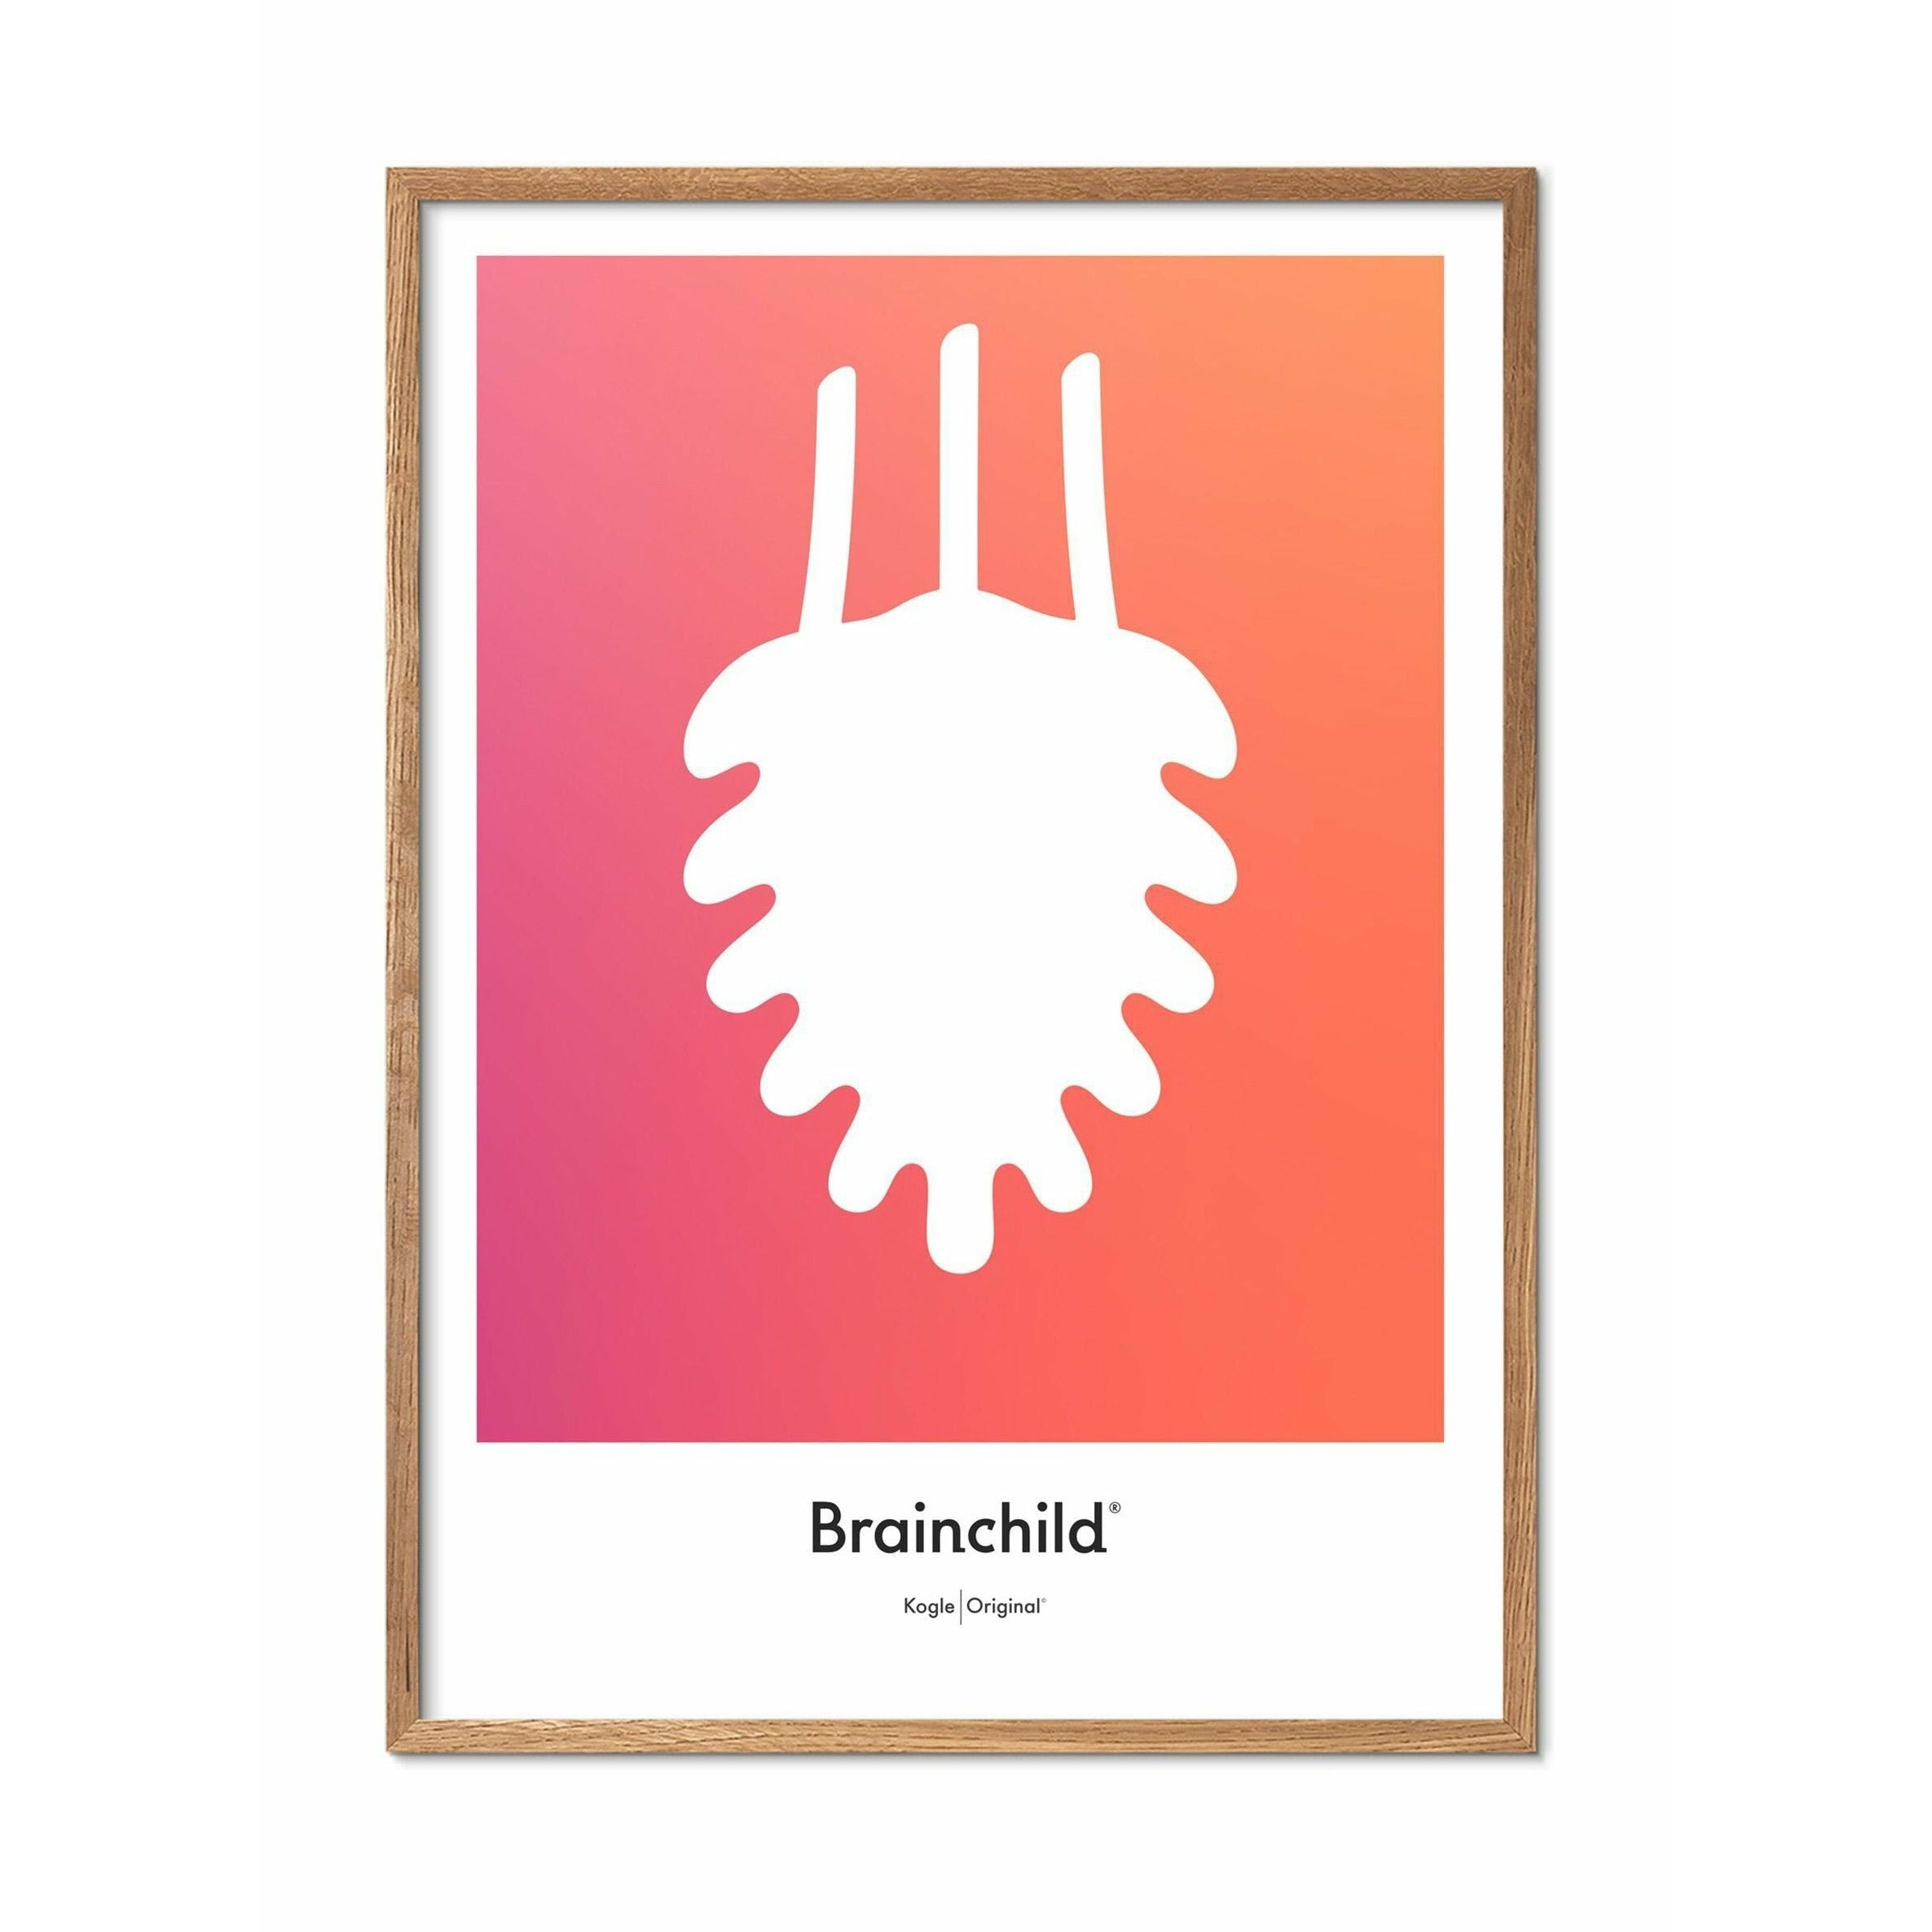 Brainchild Pine Cone Design Icon Poster, Frame Made Of Light Wood 50x70 Cm, Orange